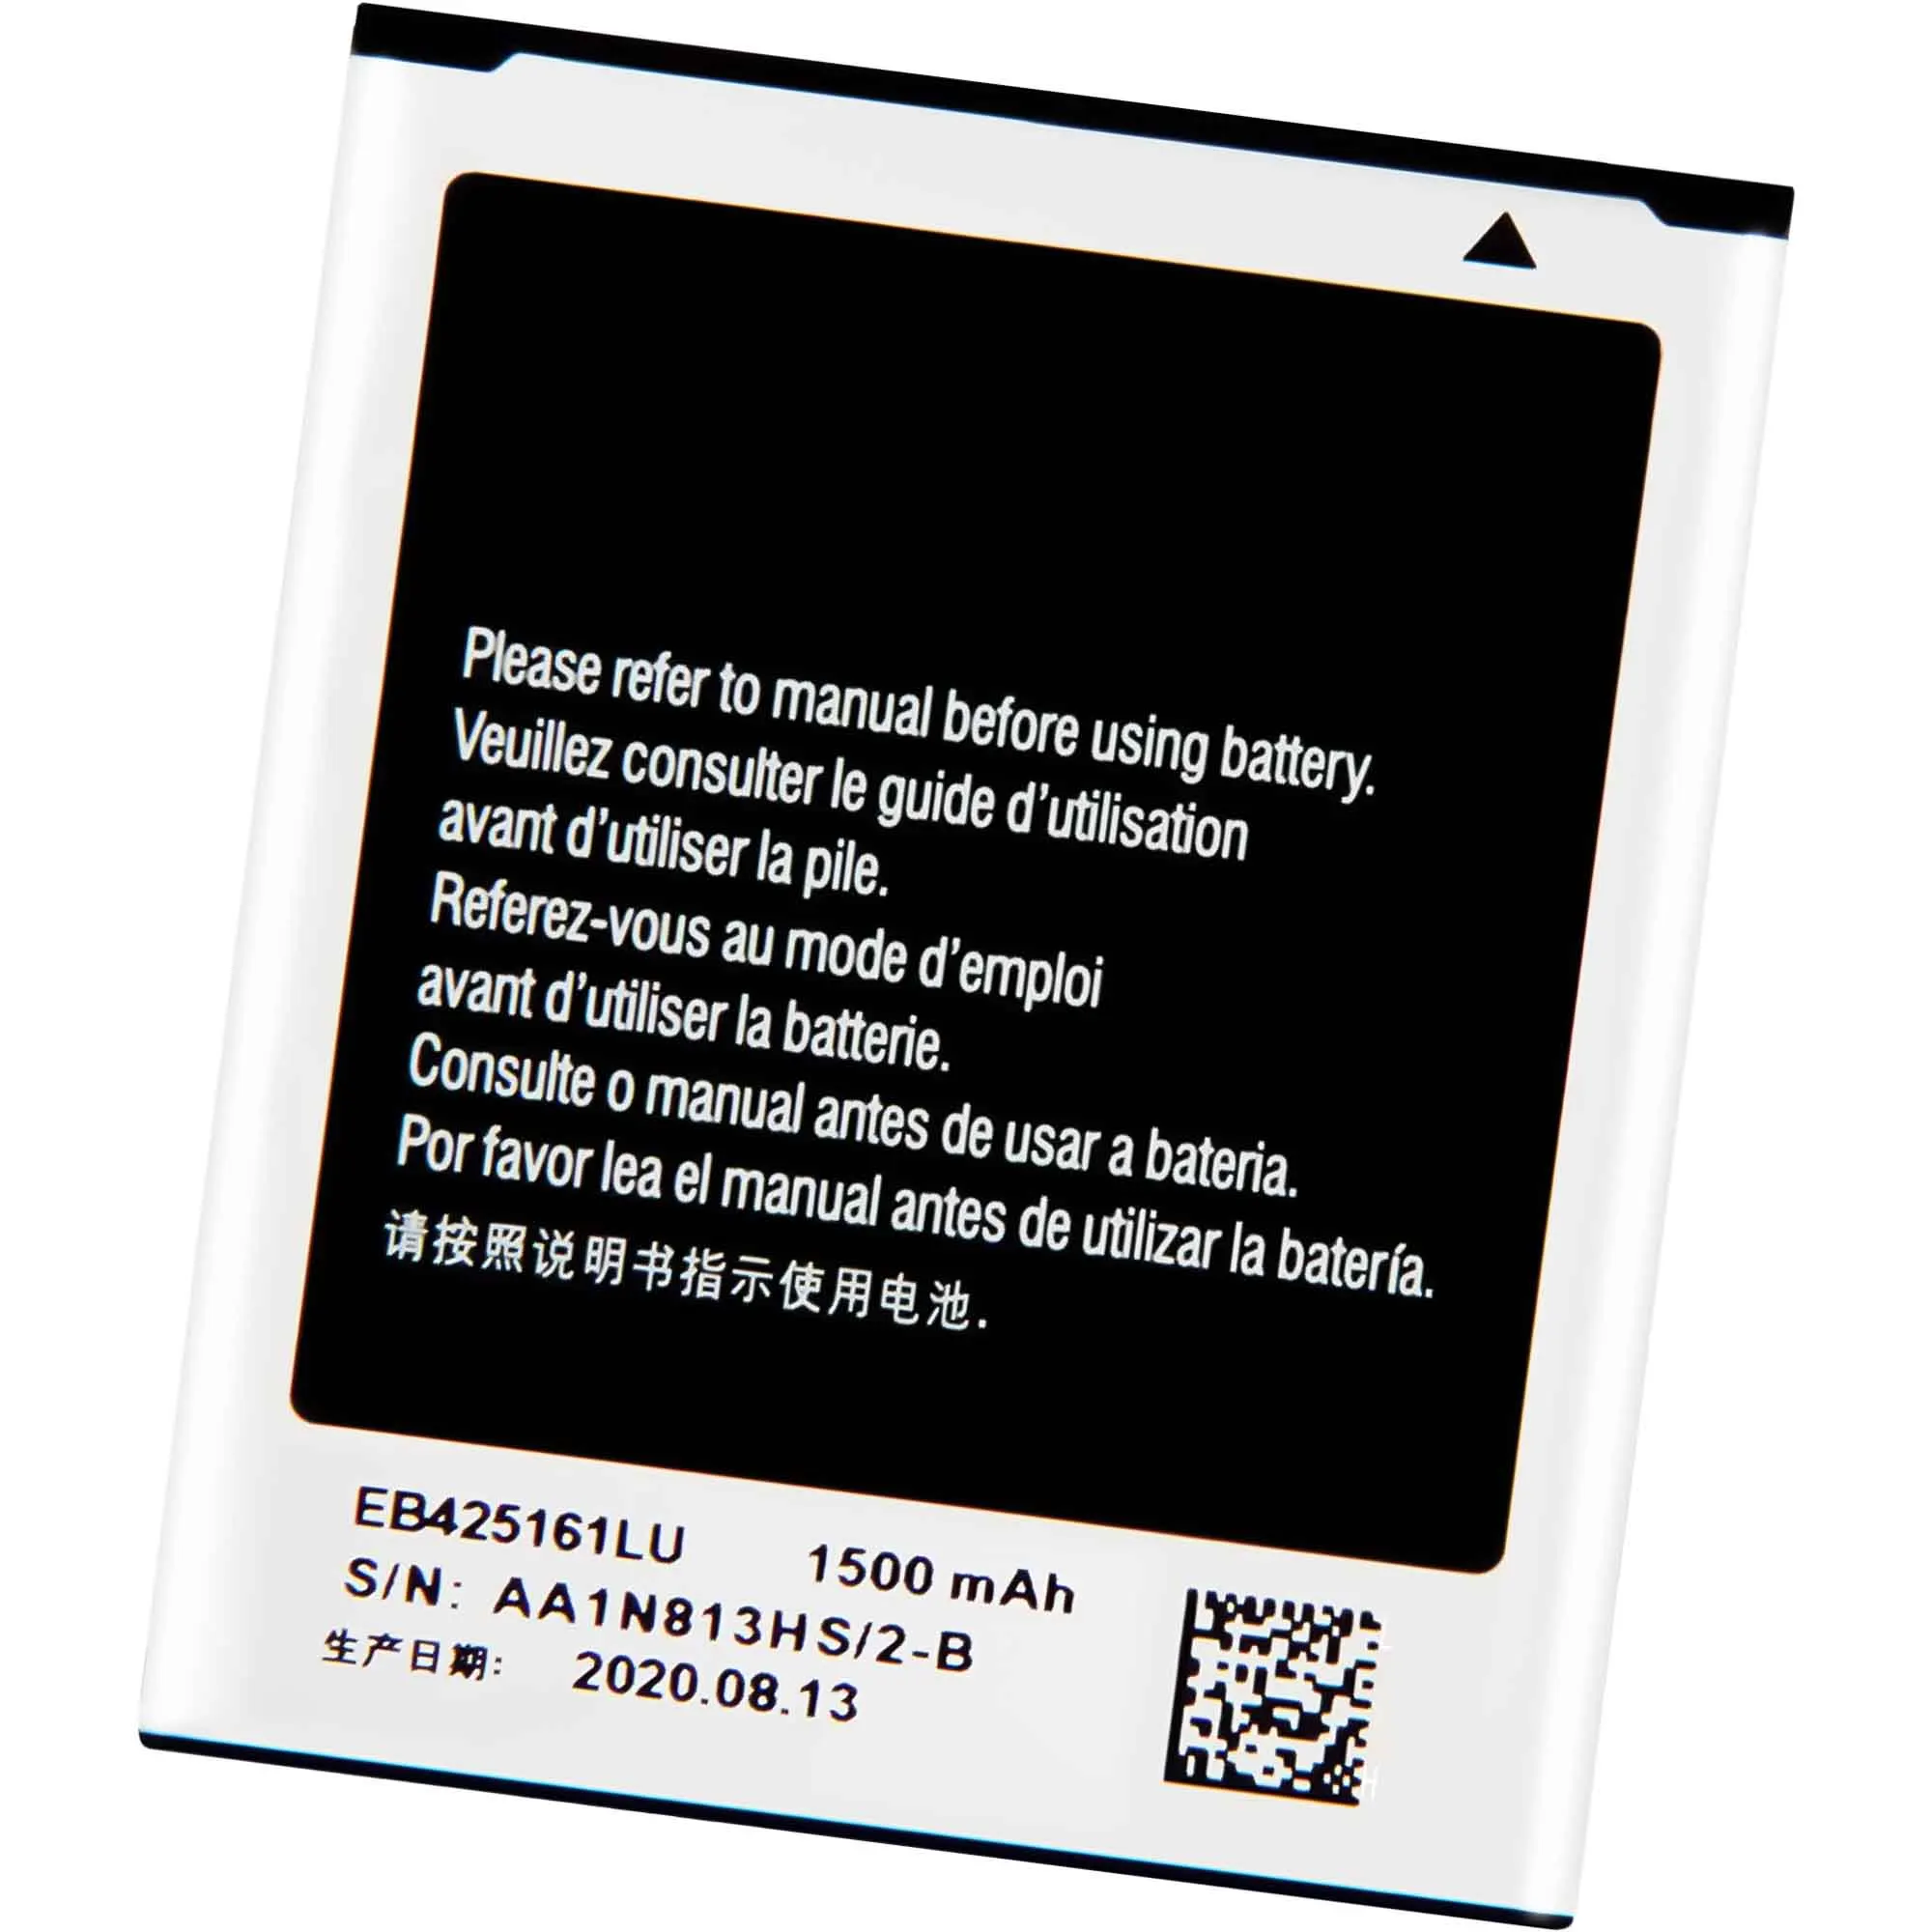 New Battery EB425161LU For Samsung J1 Mini Prime SM-J106F SM-J105H S7562 S7560 S7566 S7568 S7572 S7580 i8190 I8160 S7582 images - 6